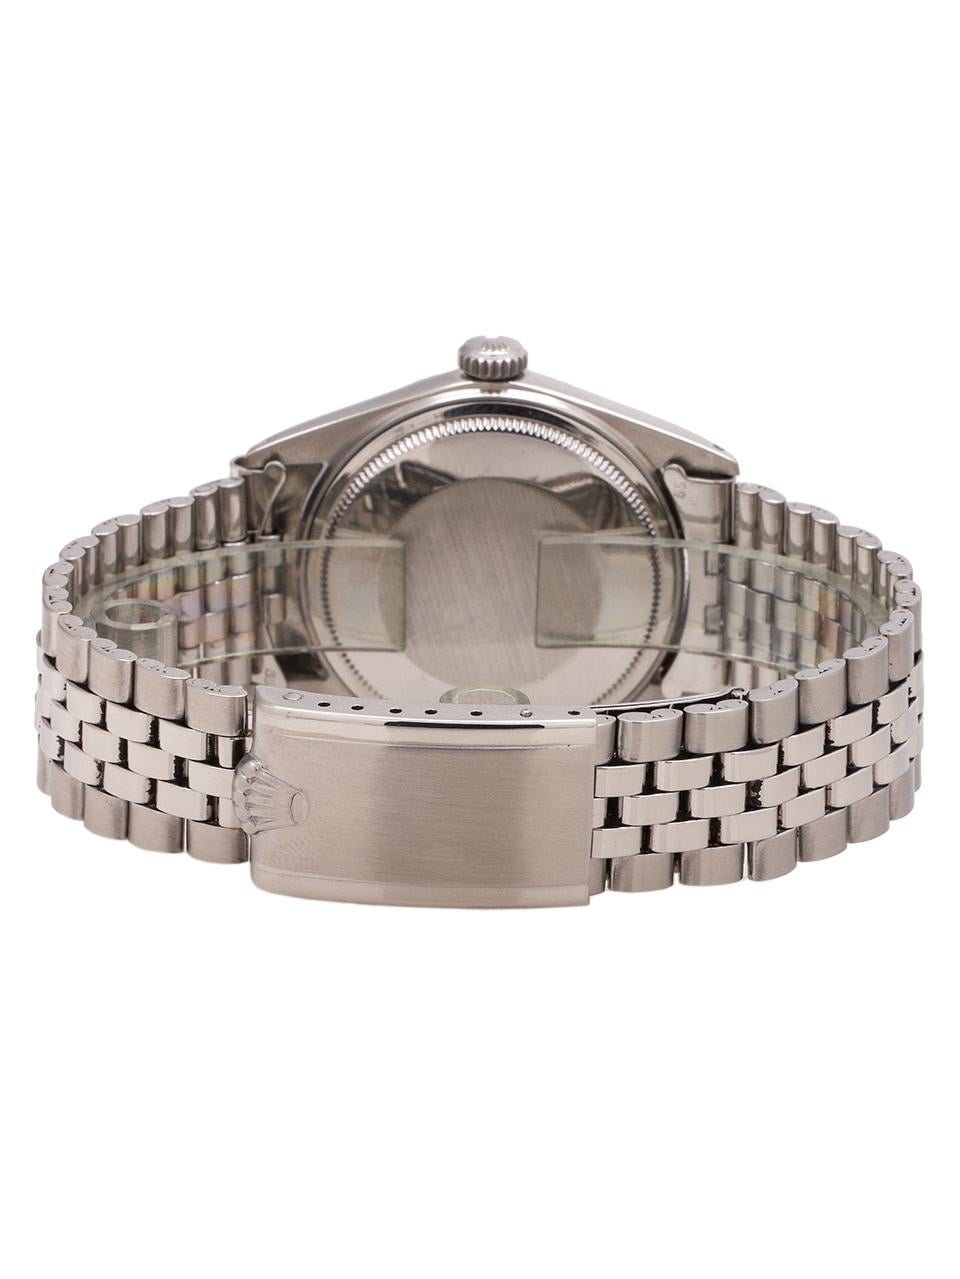 Men's Rolex White Gold Stainless Steel Datejust self winding wristwatch Ref 1601